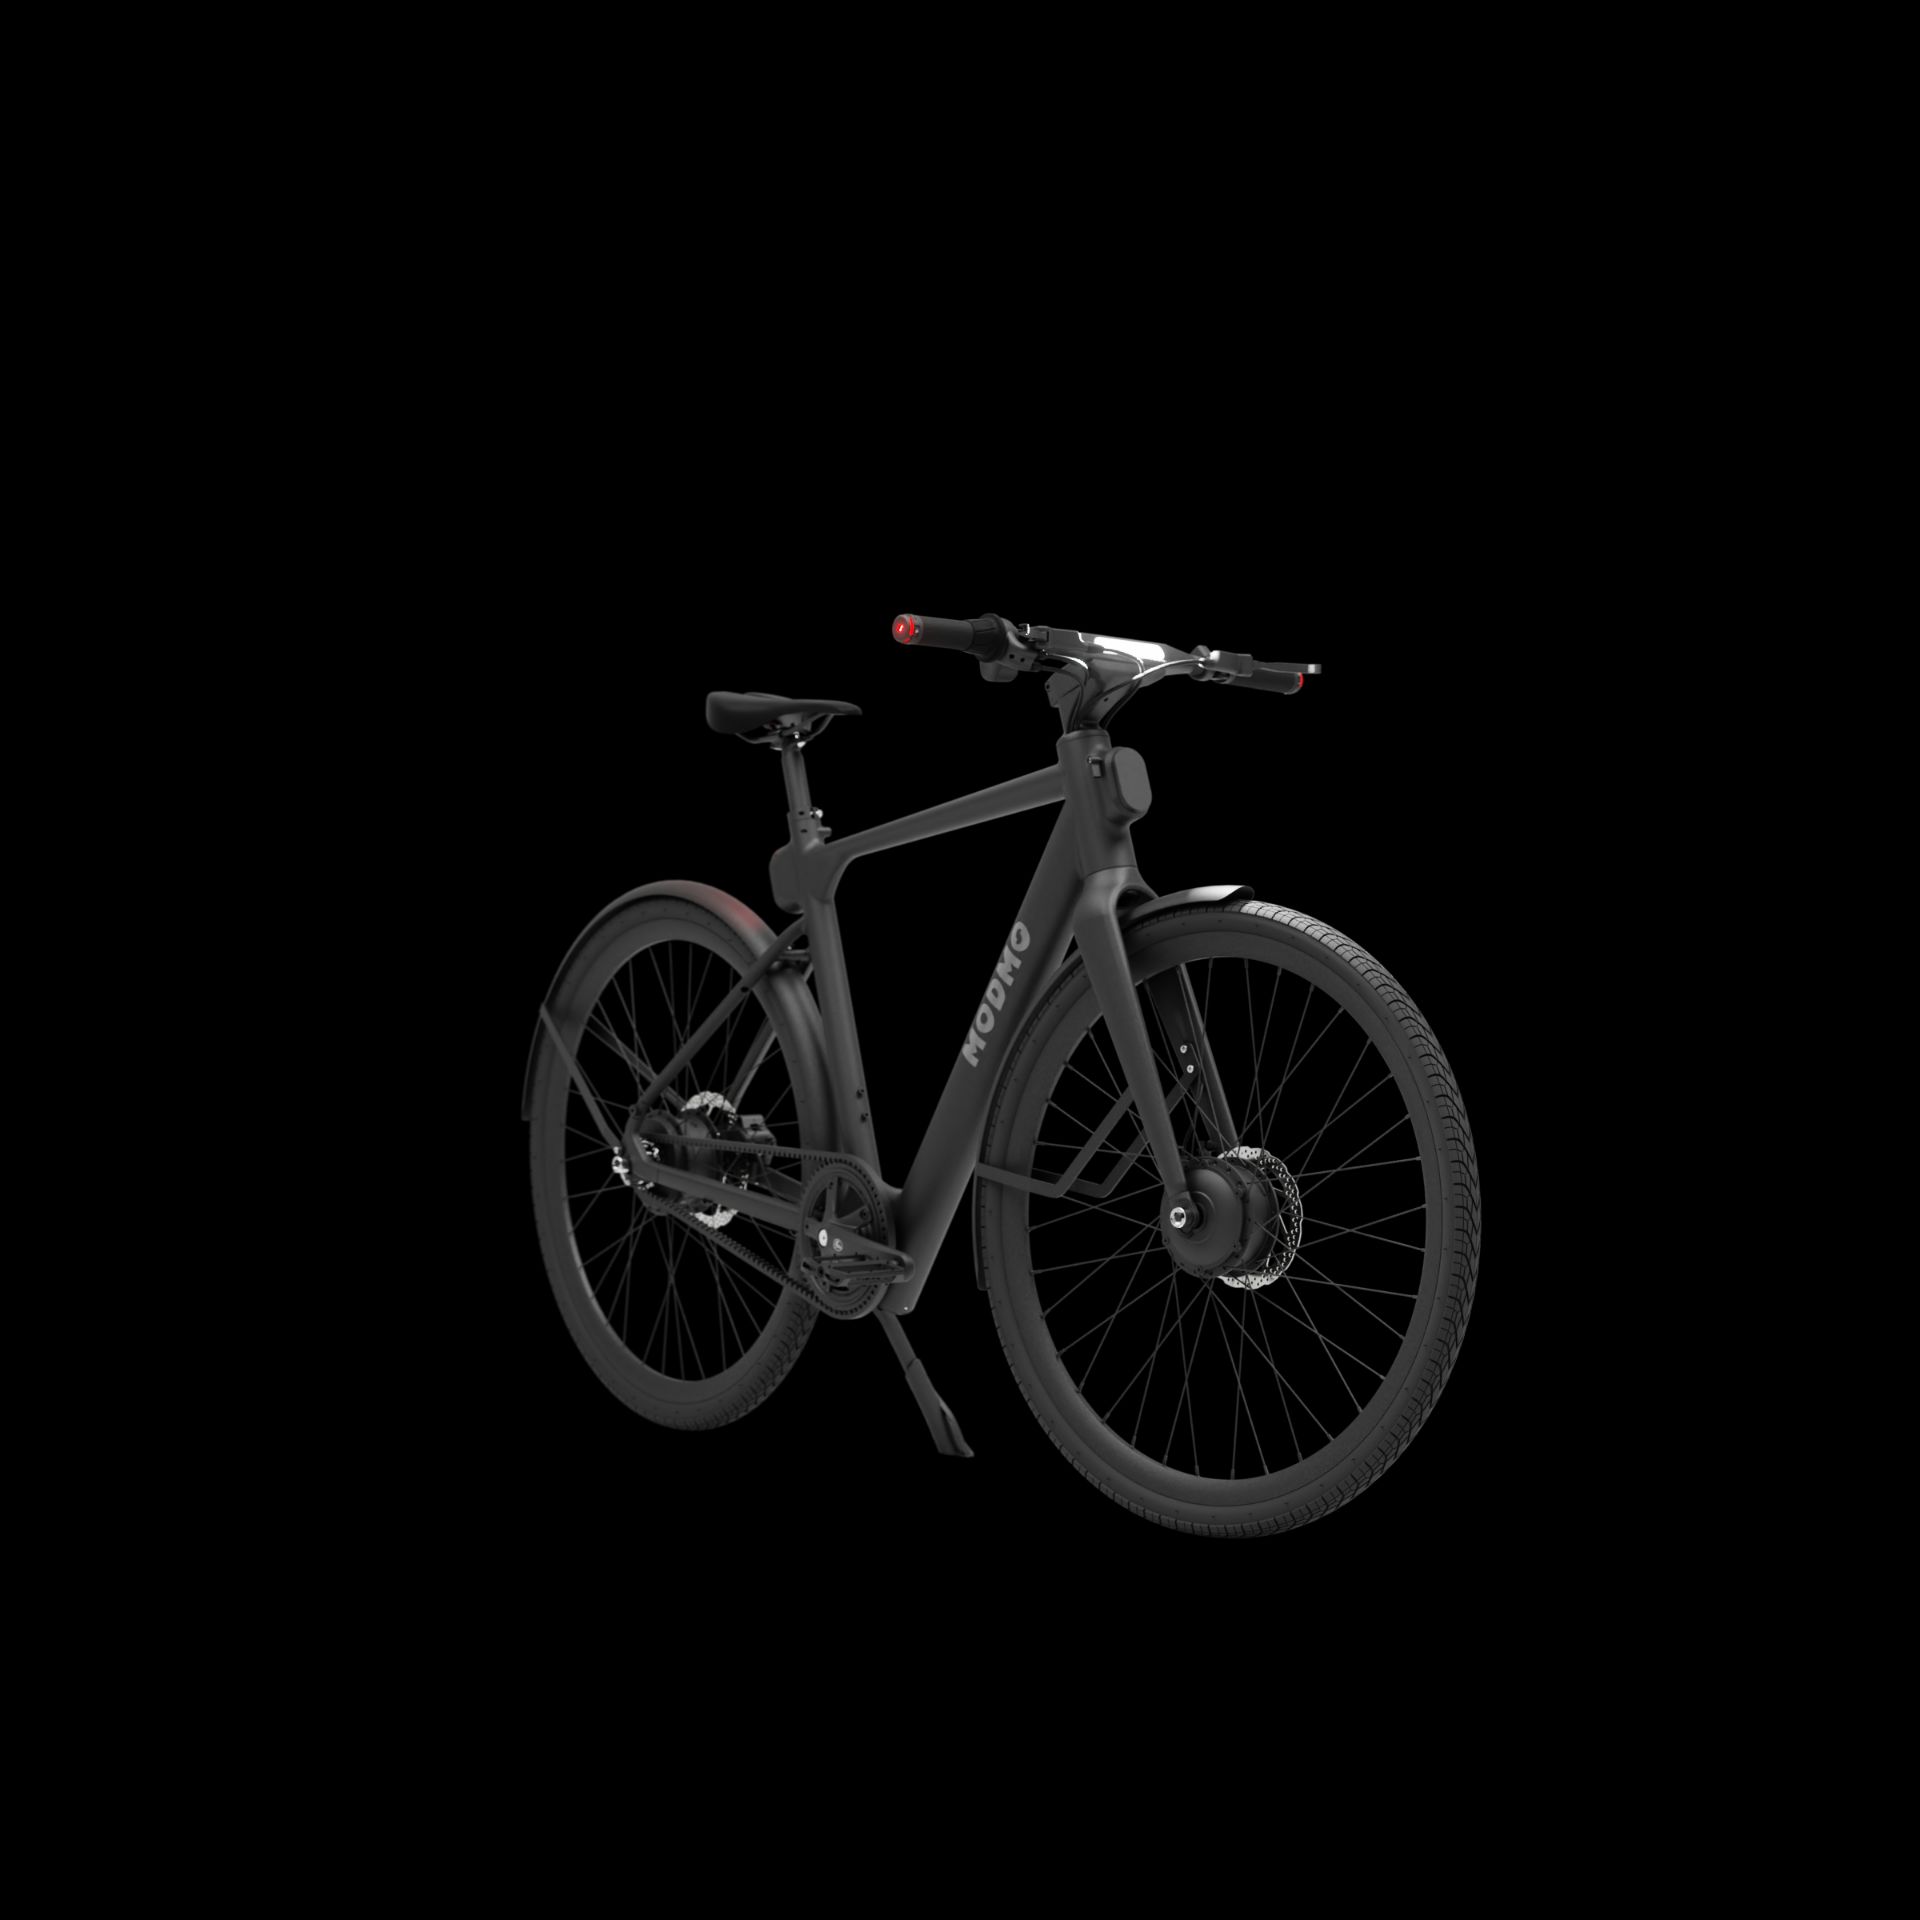 Modmo Saigon+ Electric Bicycle - RRP £2800 - Size L (Rider 175-190cm) - Image 5 of 19